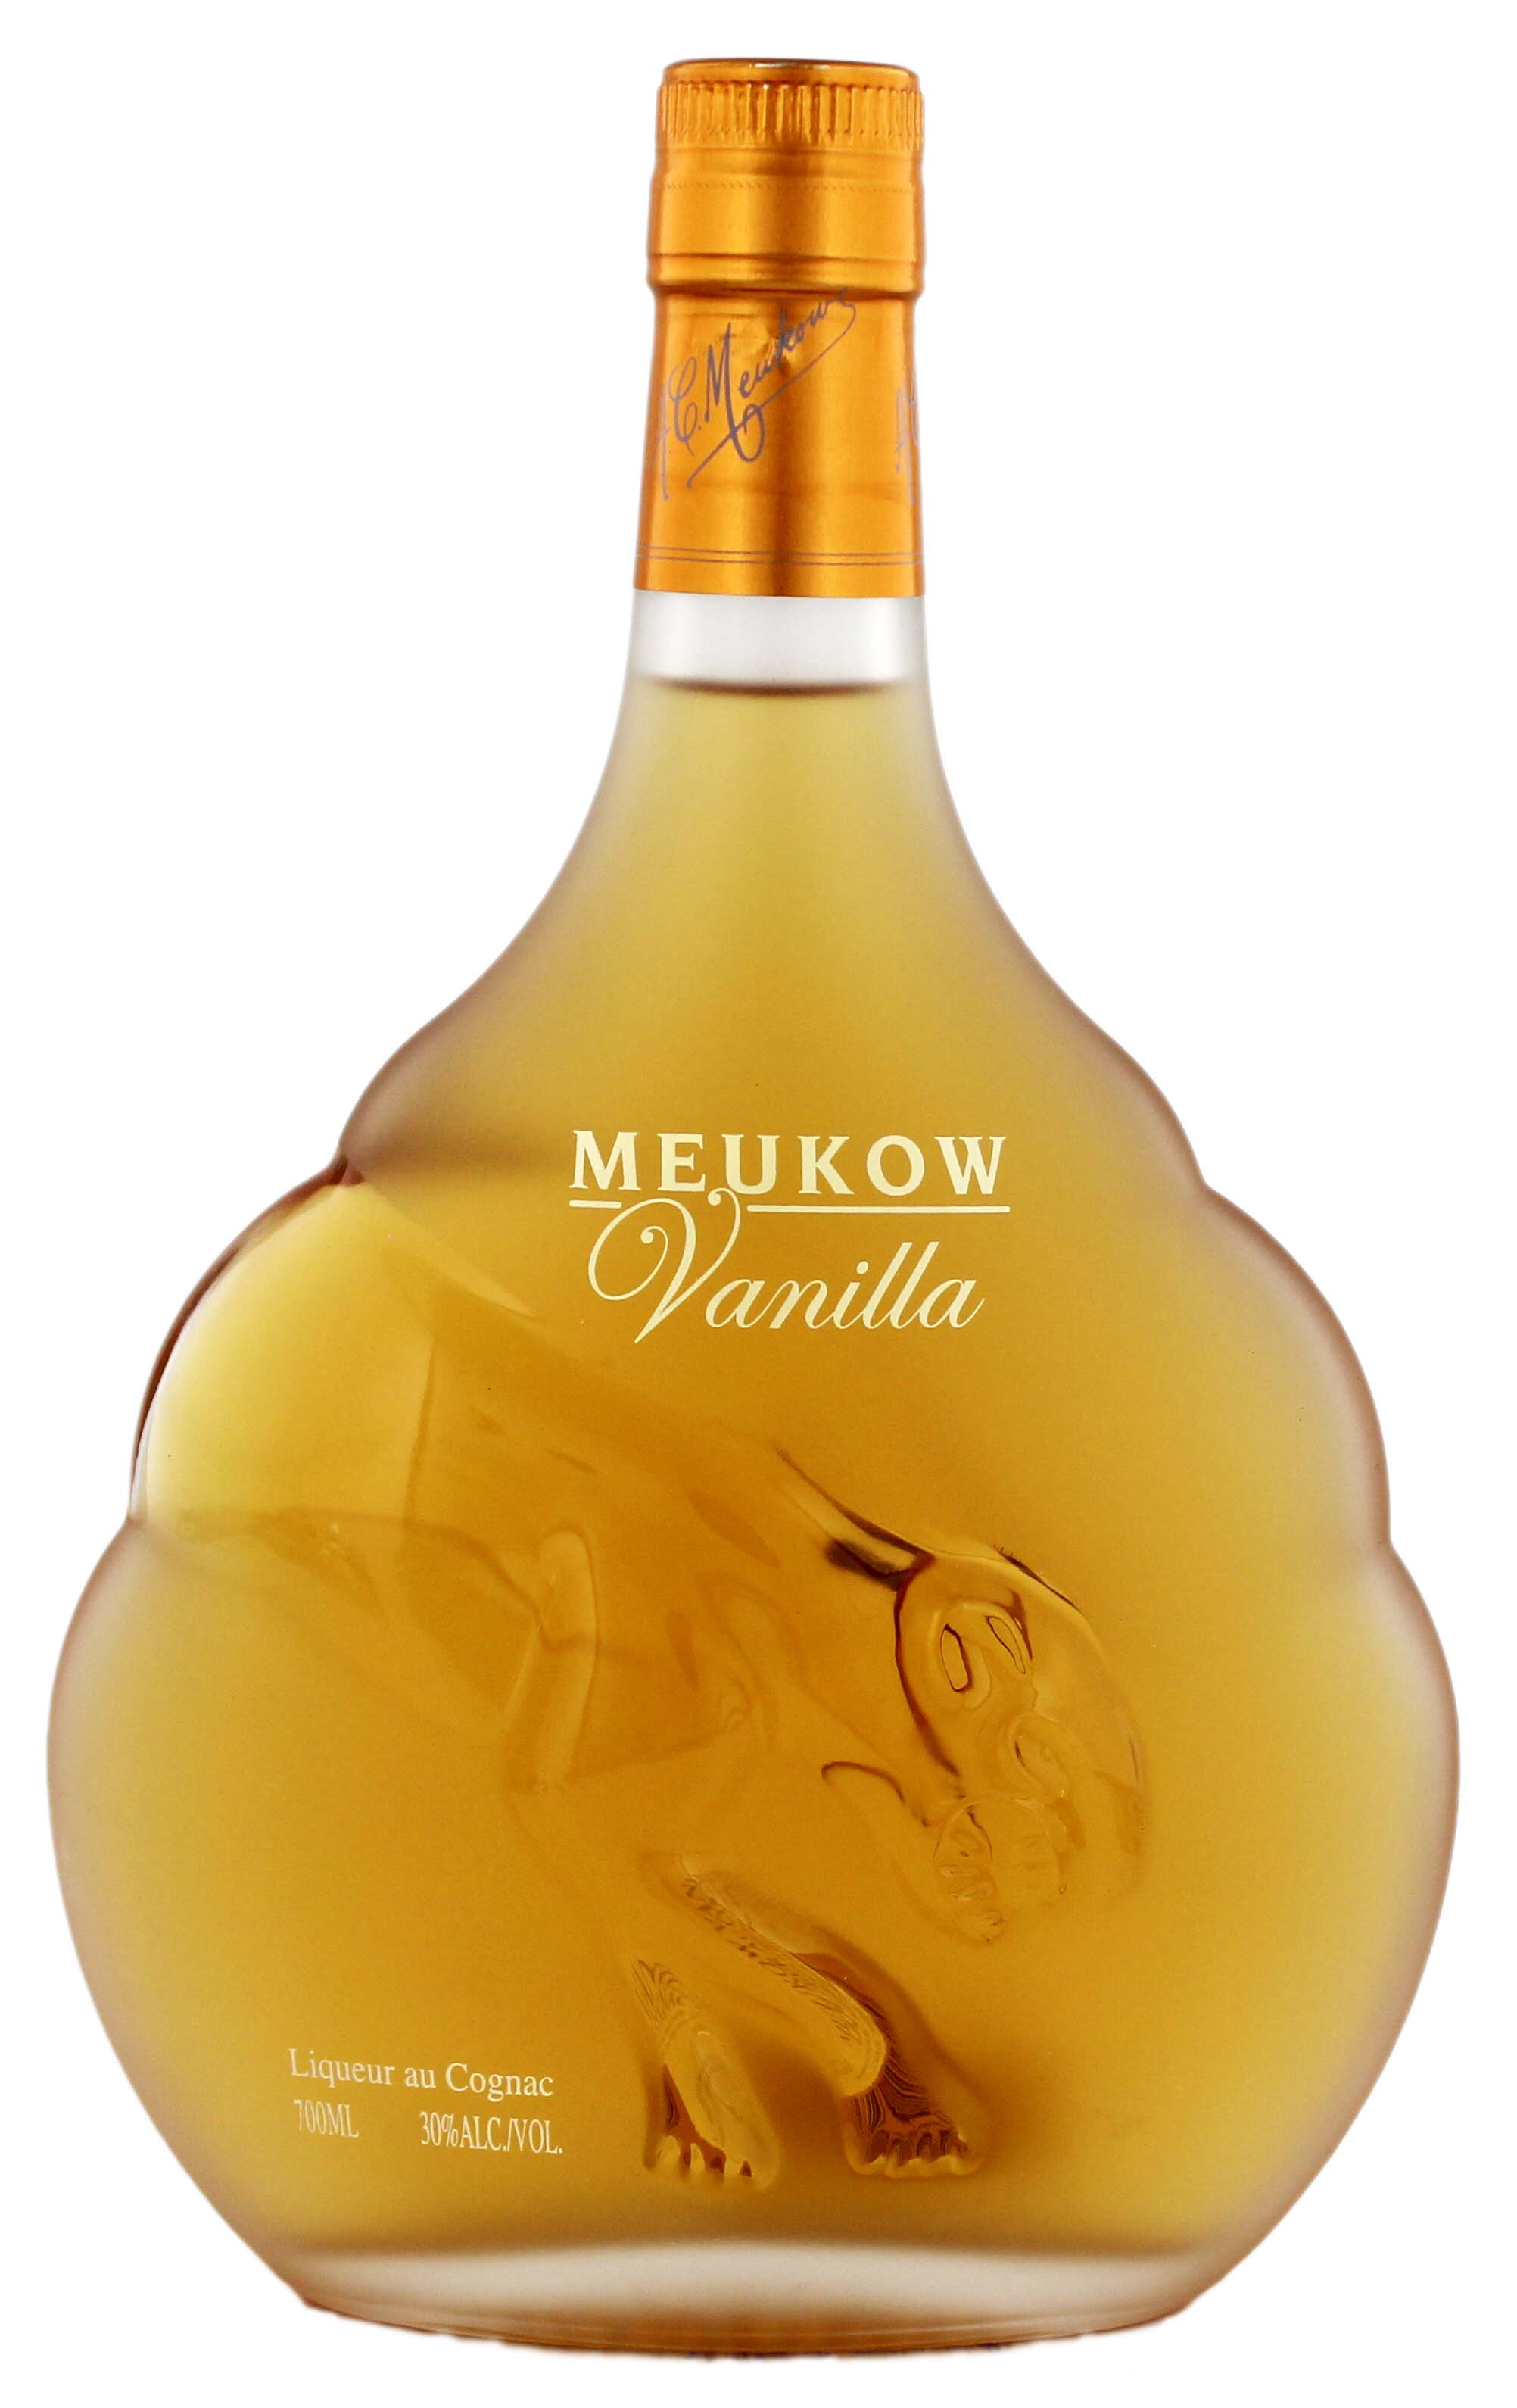 Meukow Vanilla jetzt kaufen Cognac Online Shop 